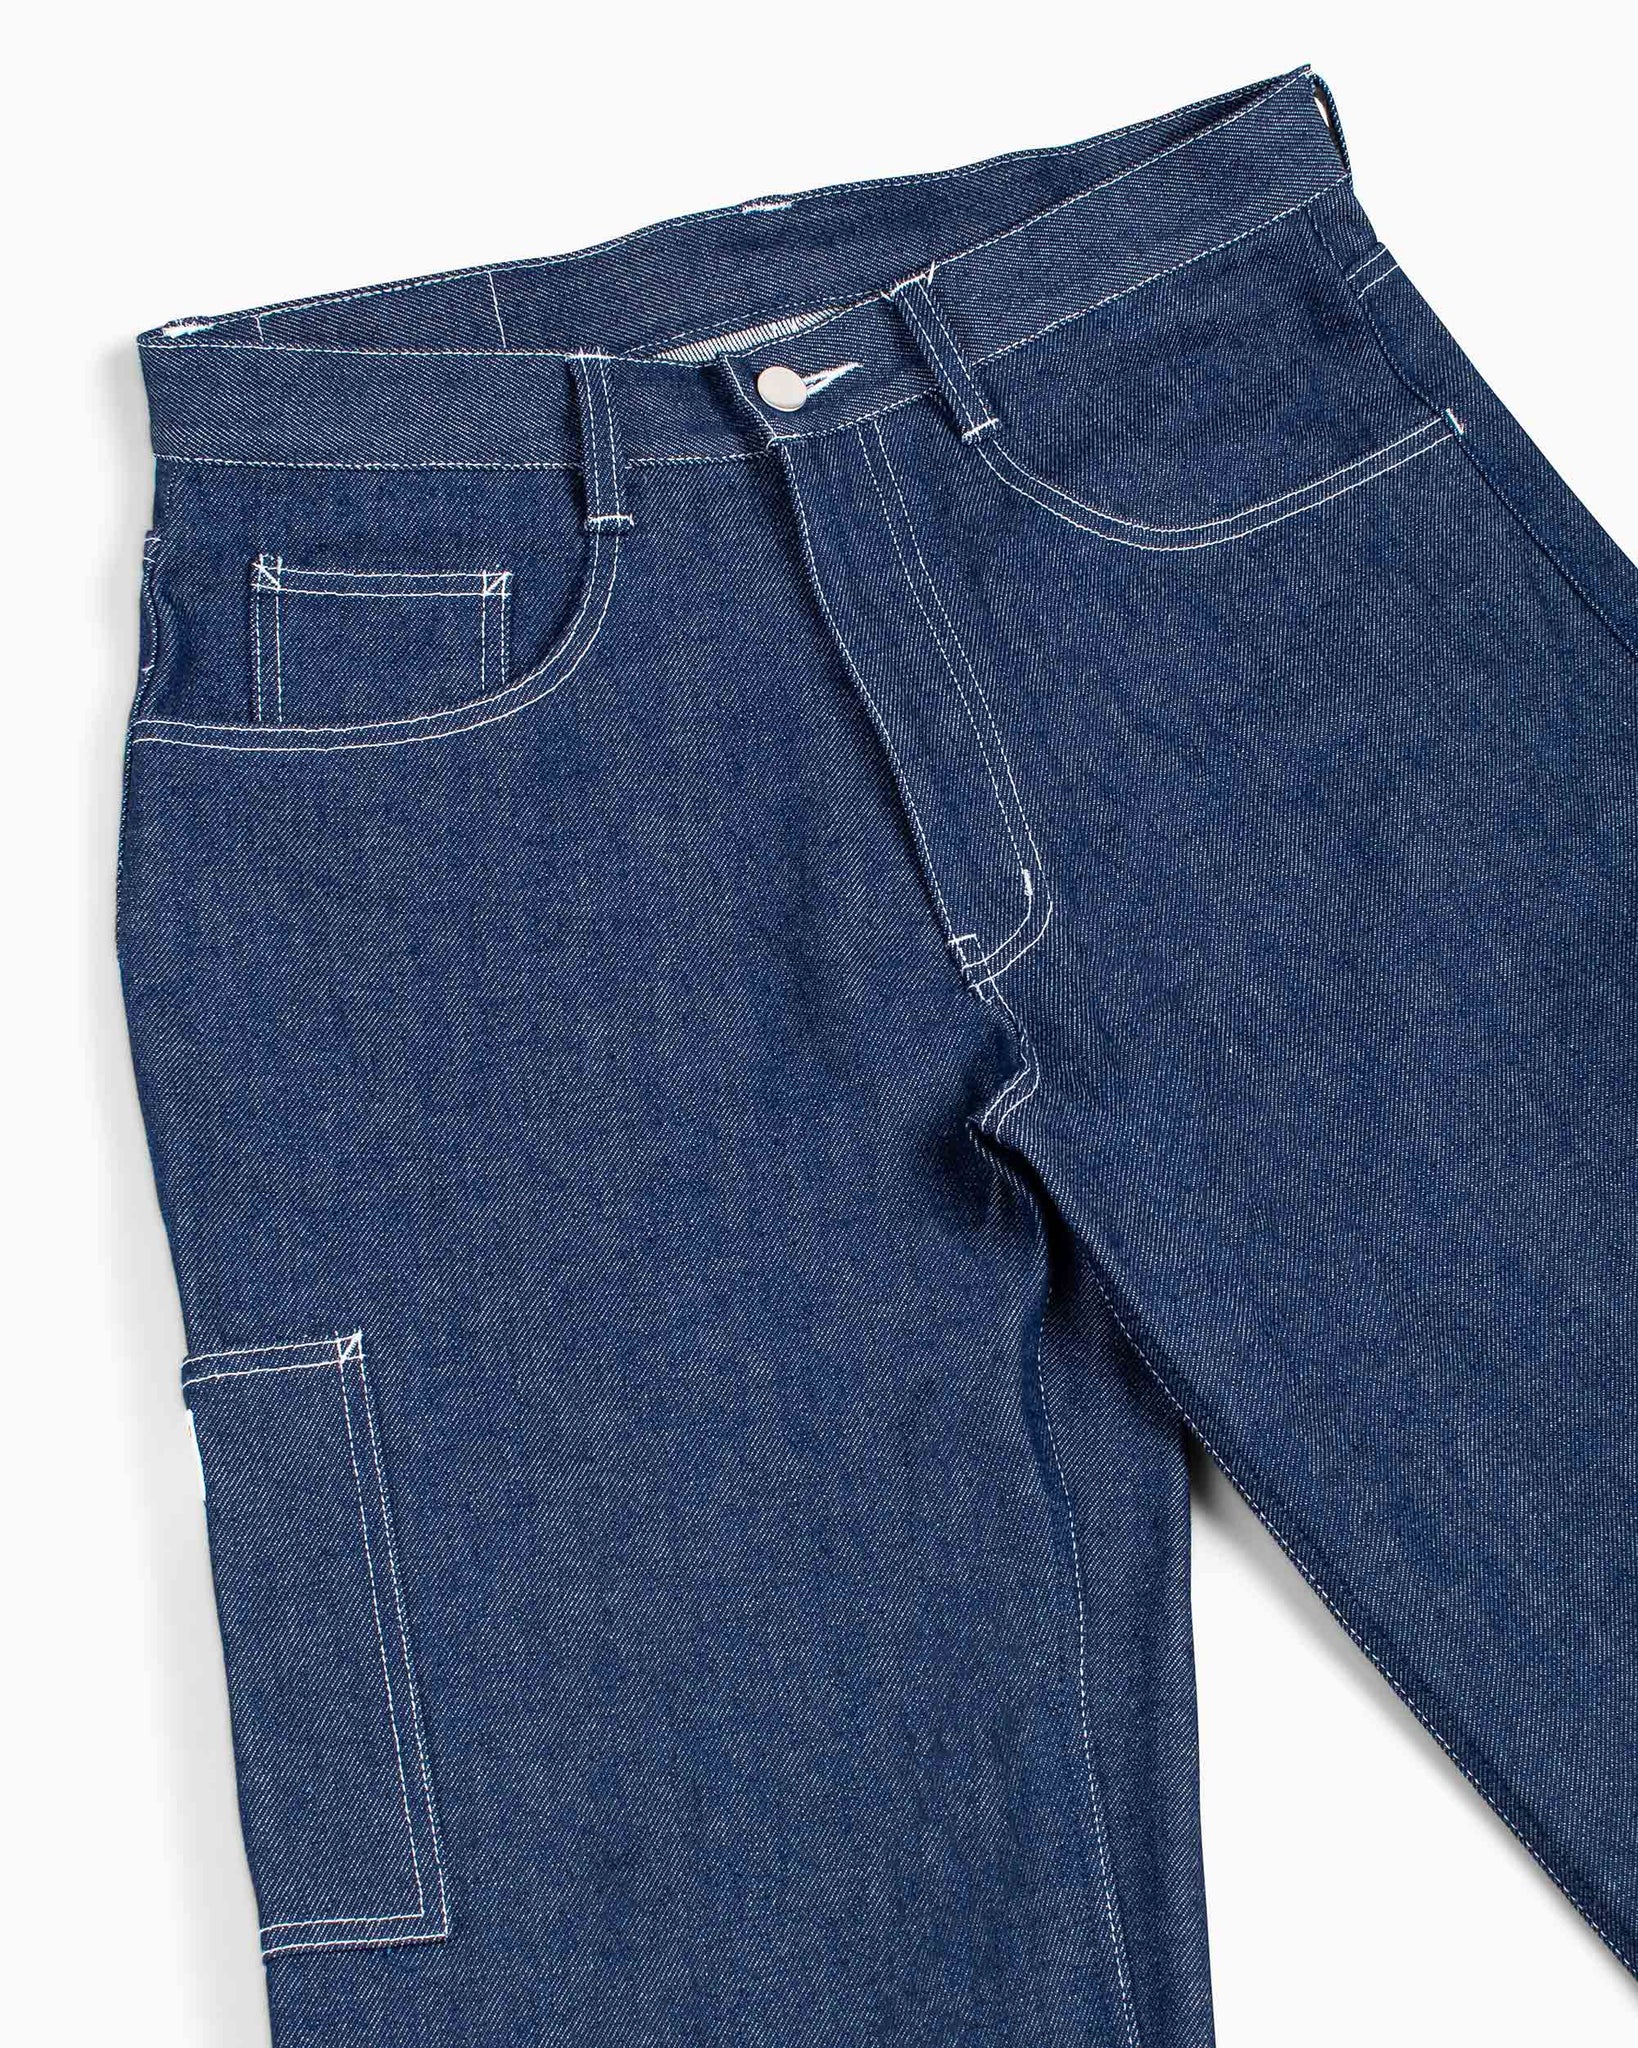 Randy's Garments 7-Pocket Jean Indigo Raw American Denim Details